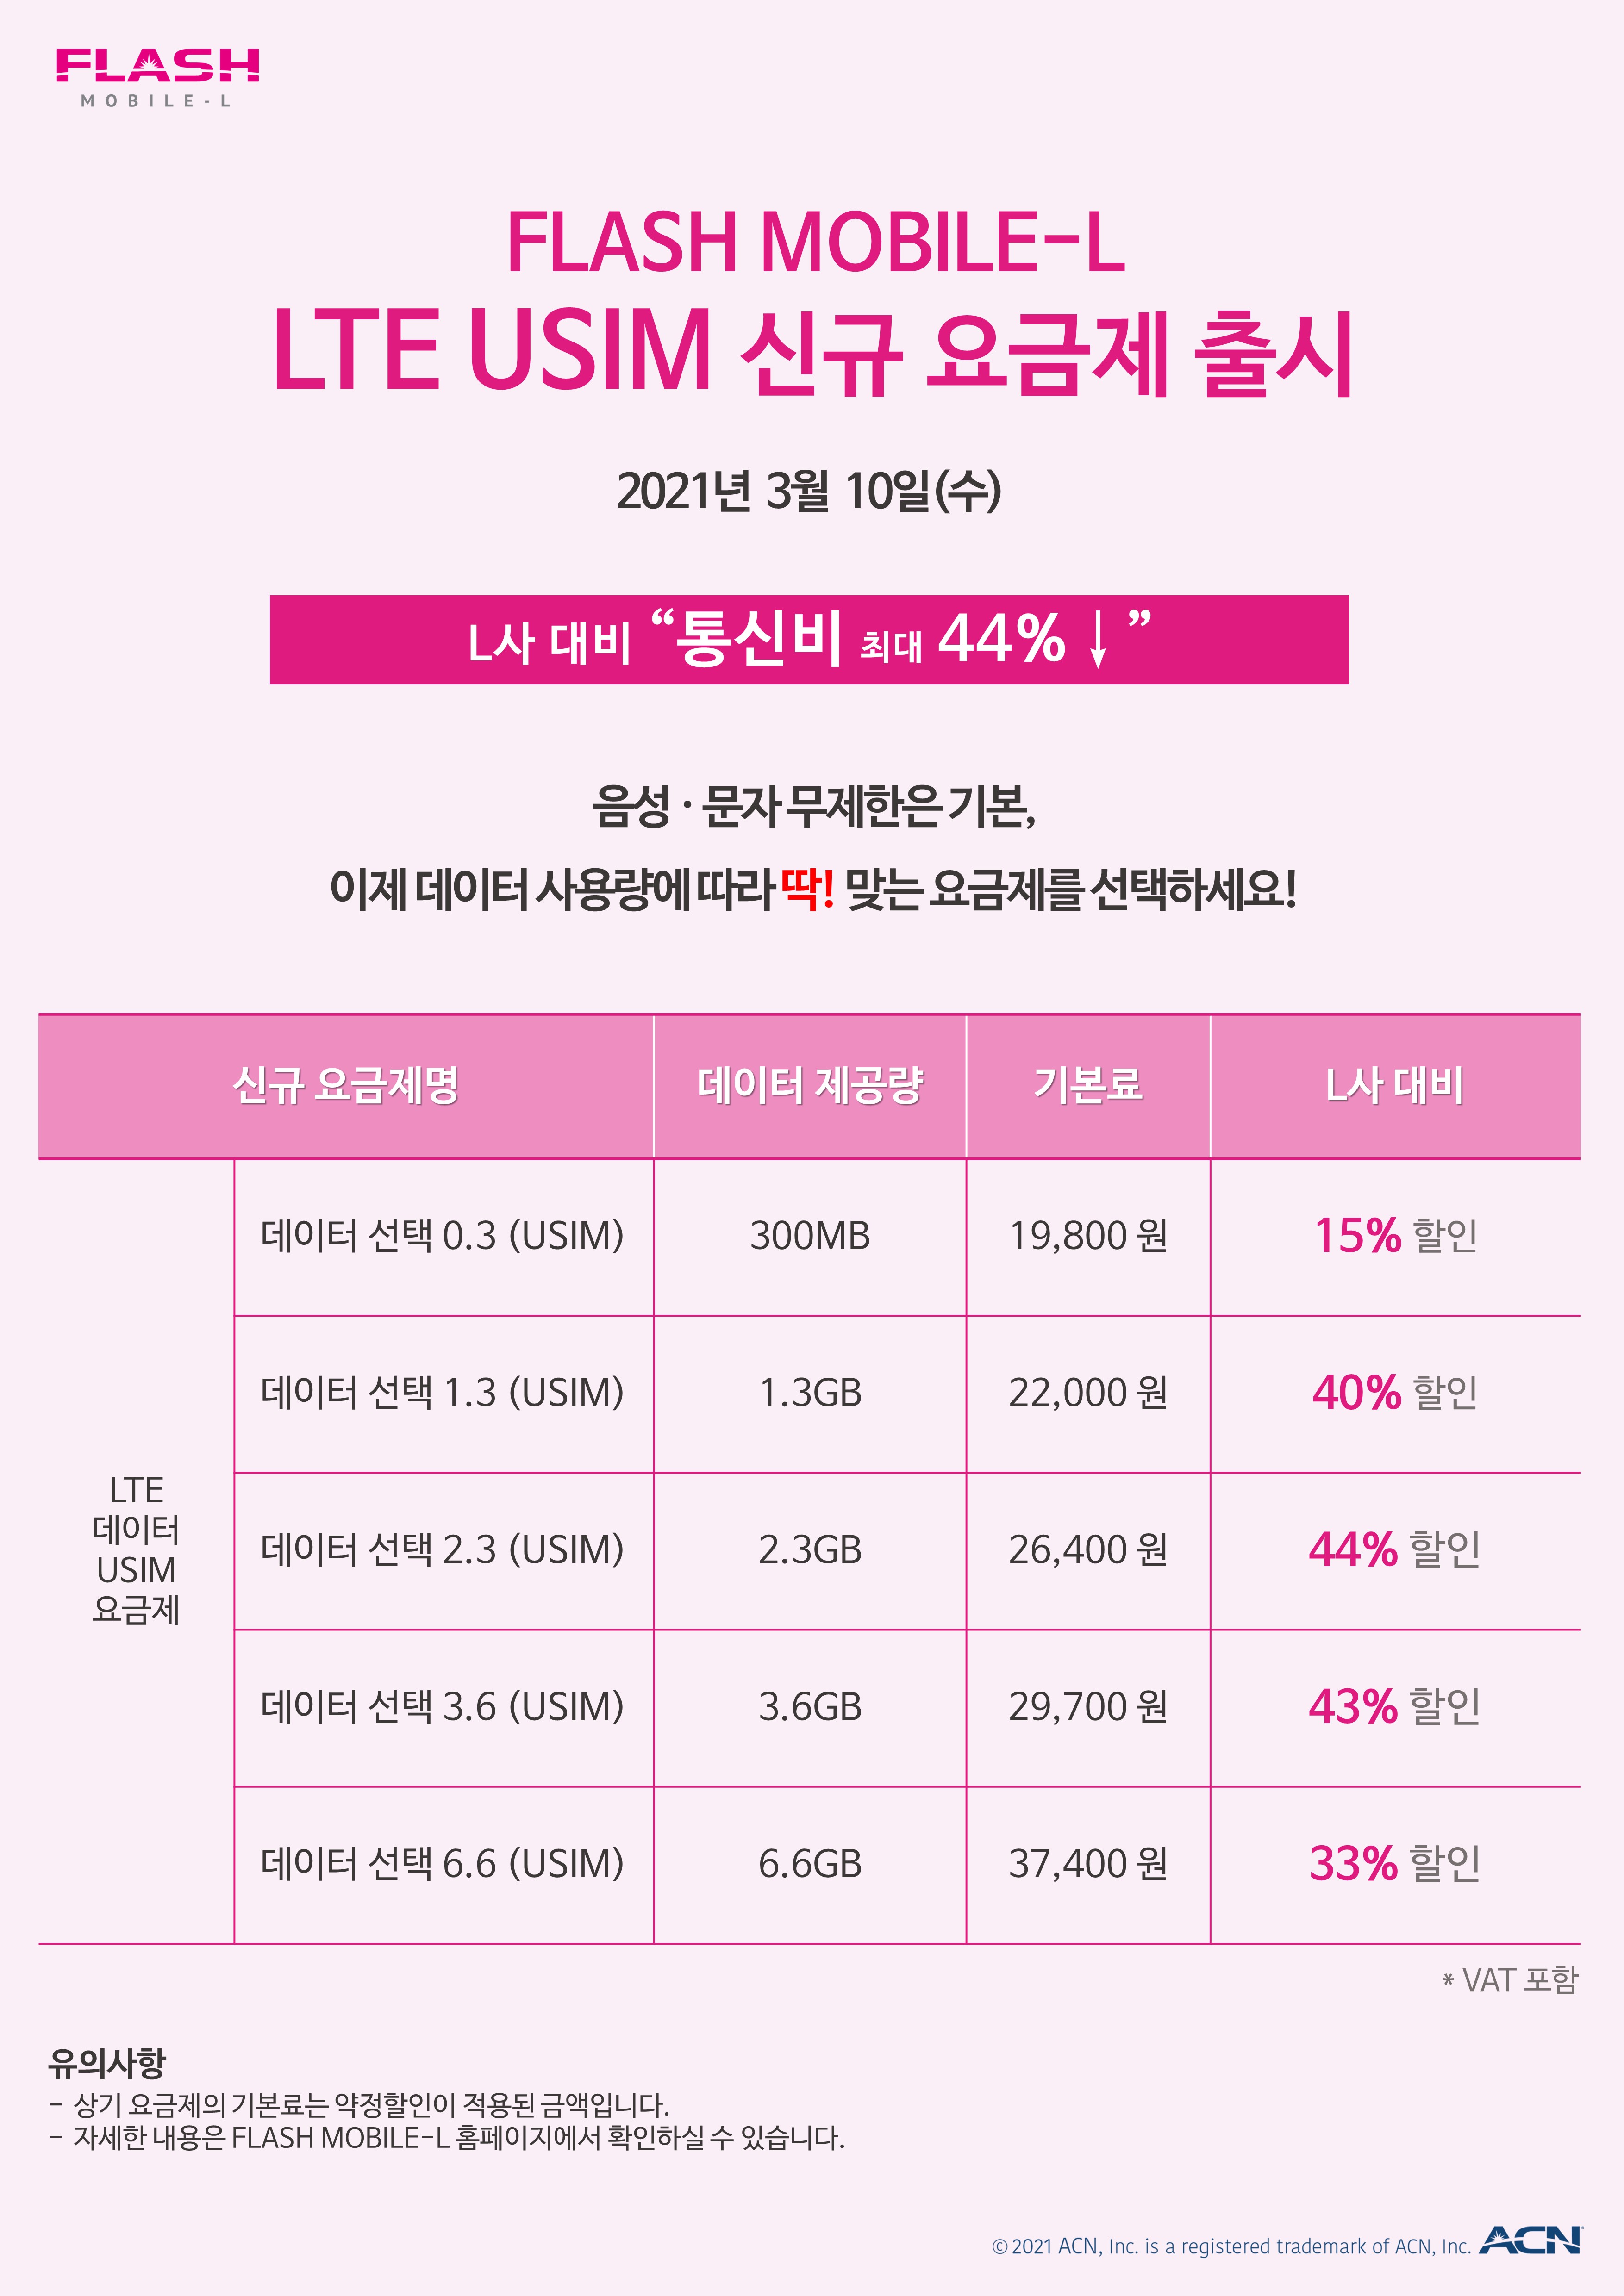 FLASH MOBILE-L LTE USIM 신규 요금제 출시